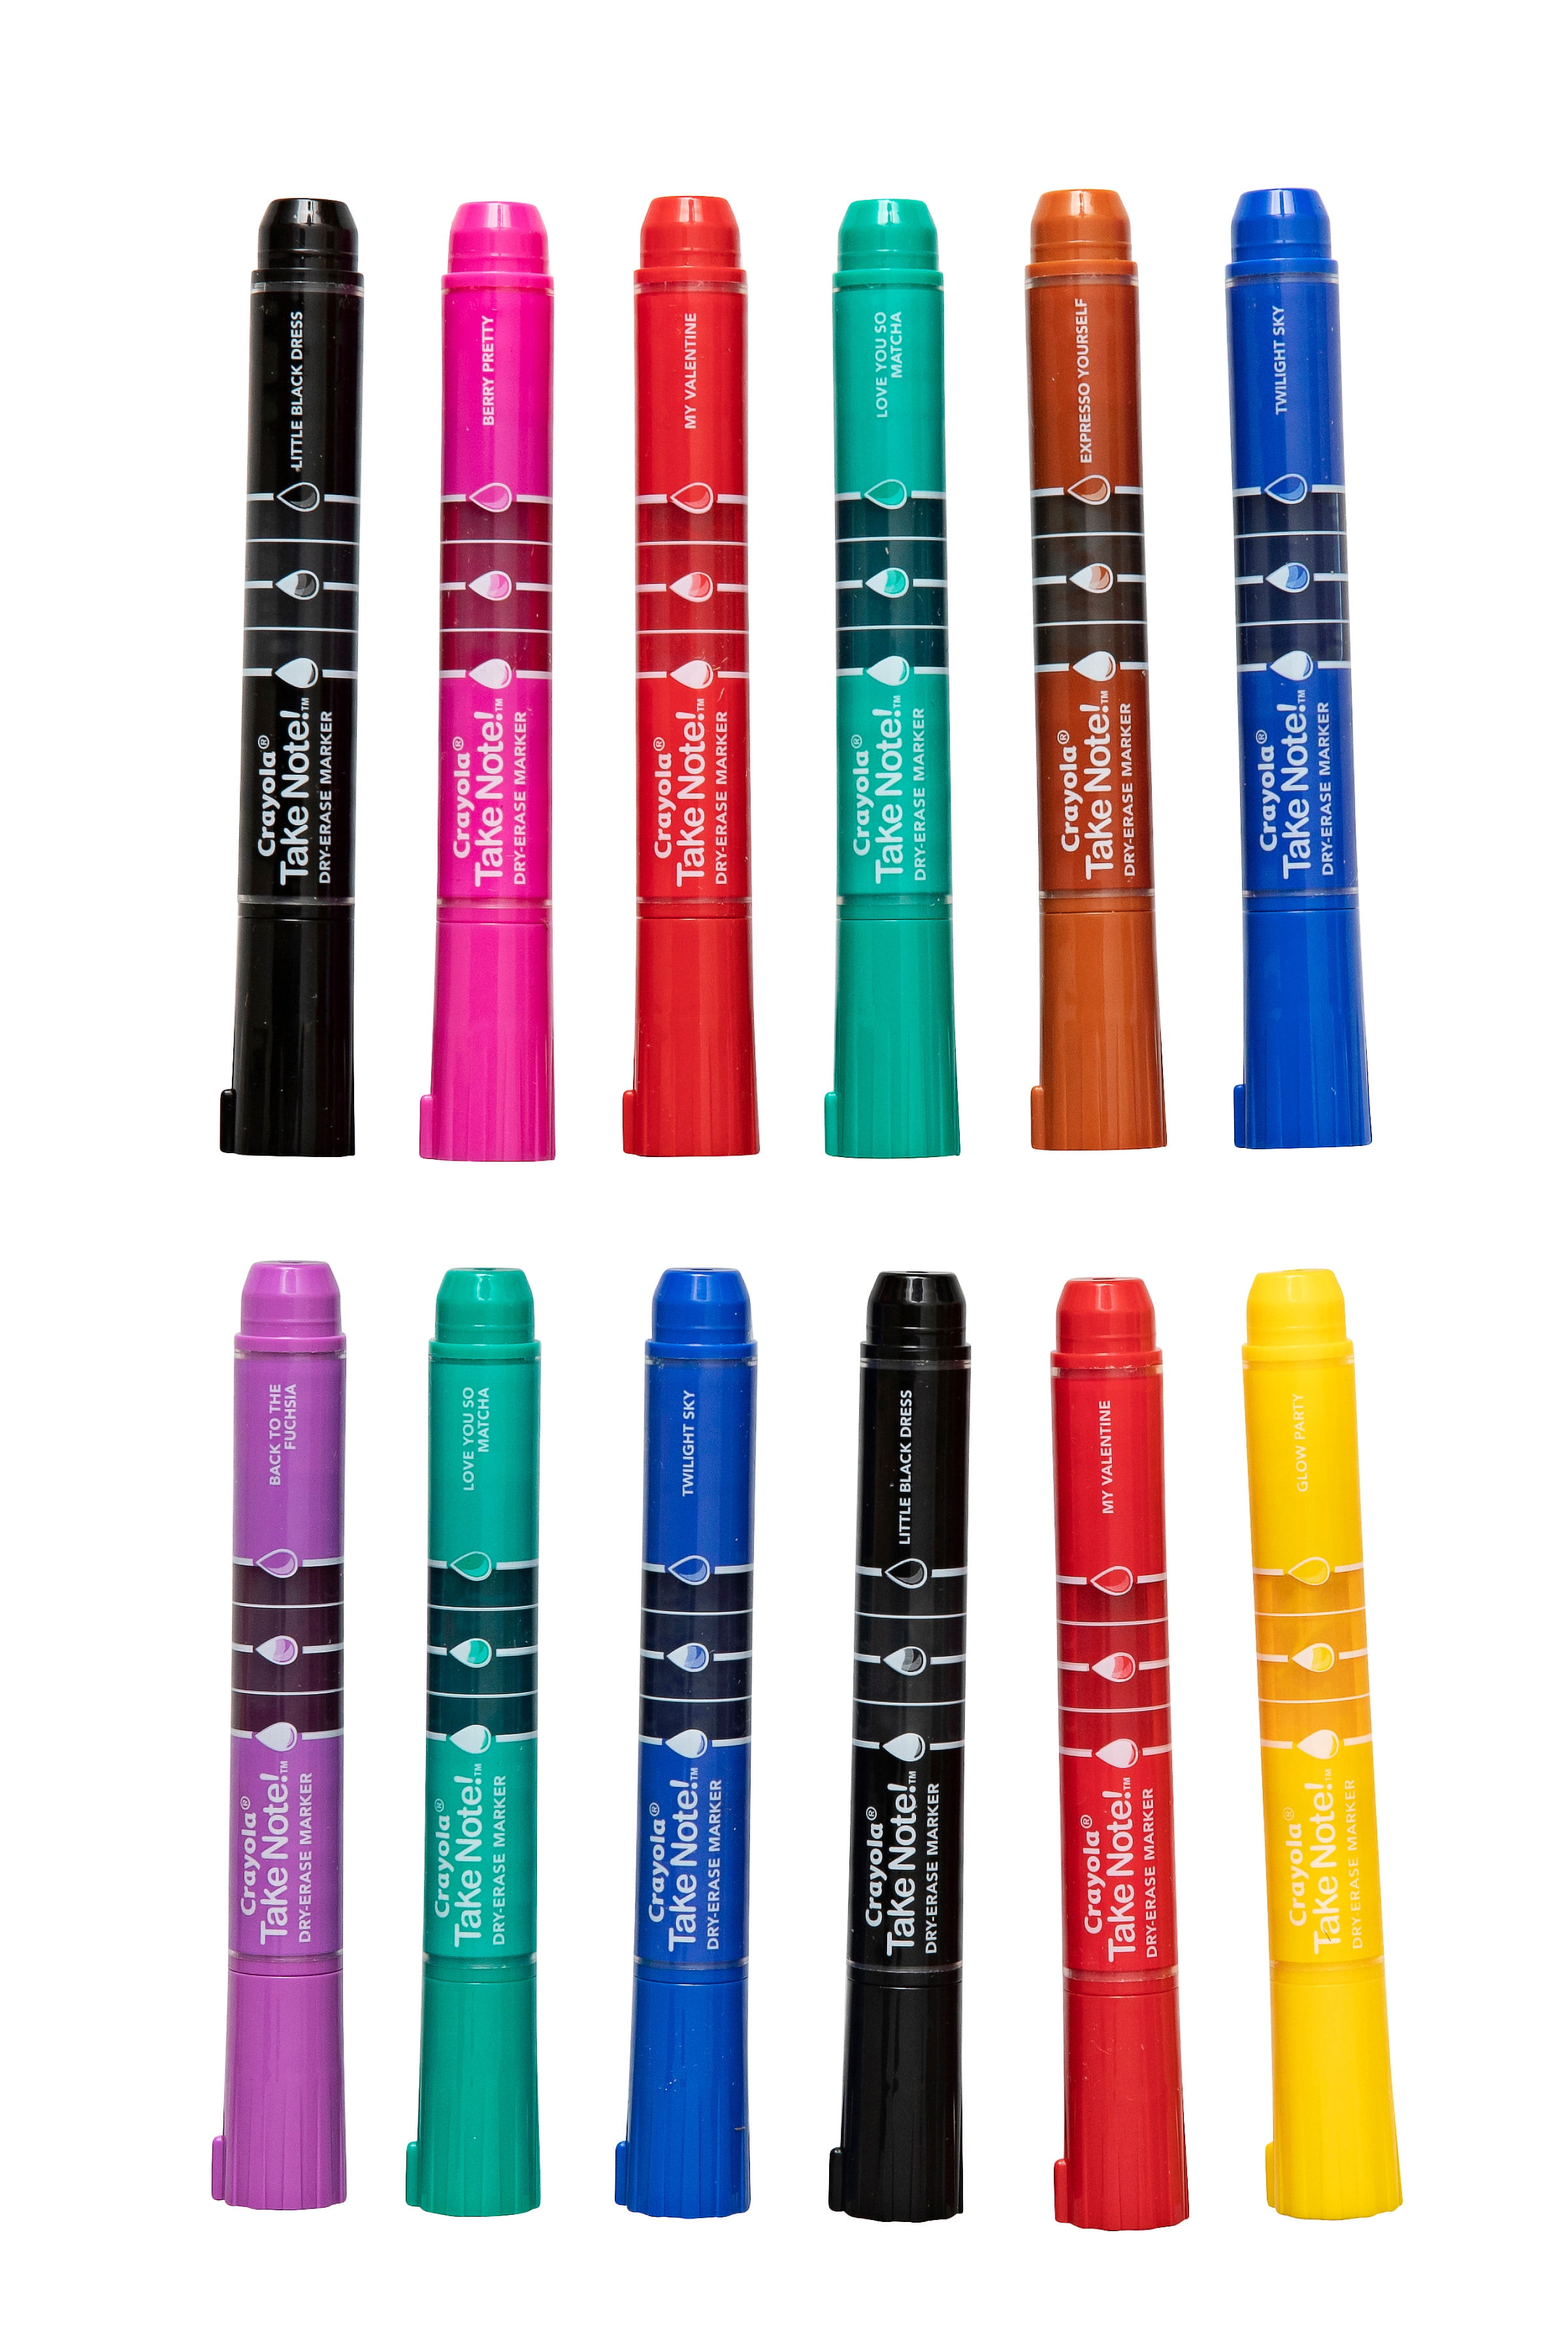 Crayola Fine Line Washable Dry Erase Markers 6 Pack